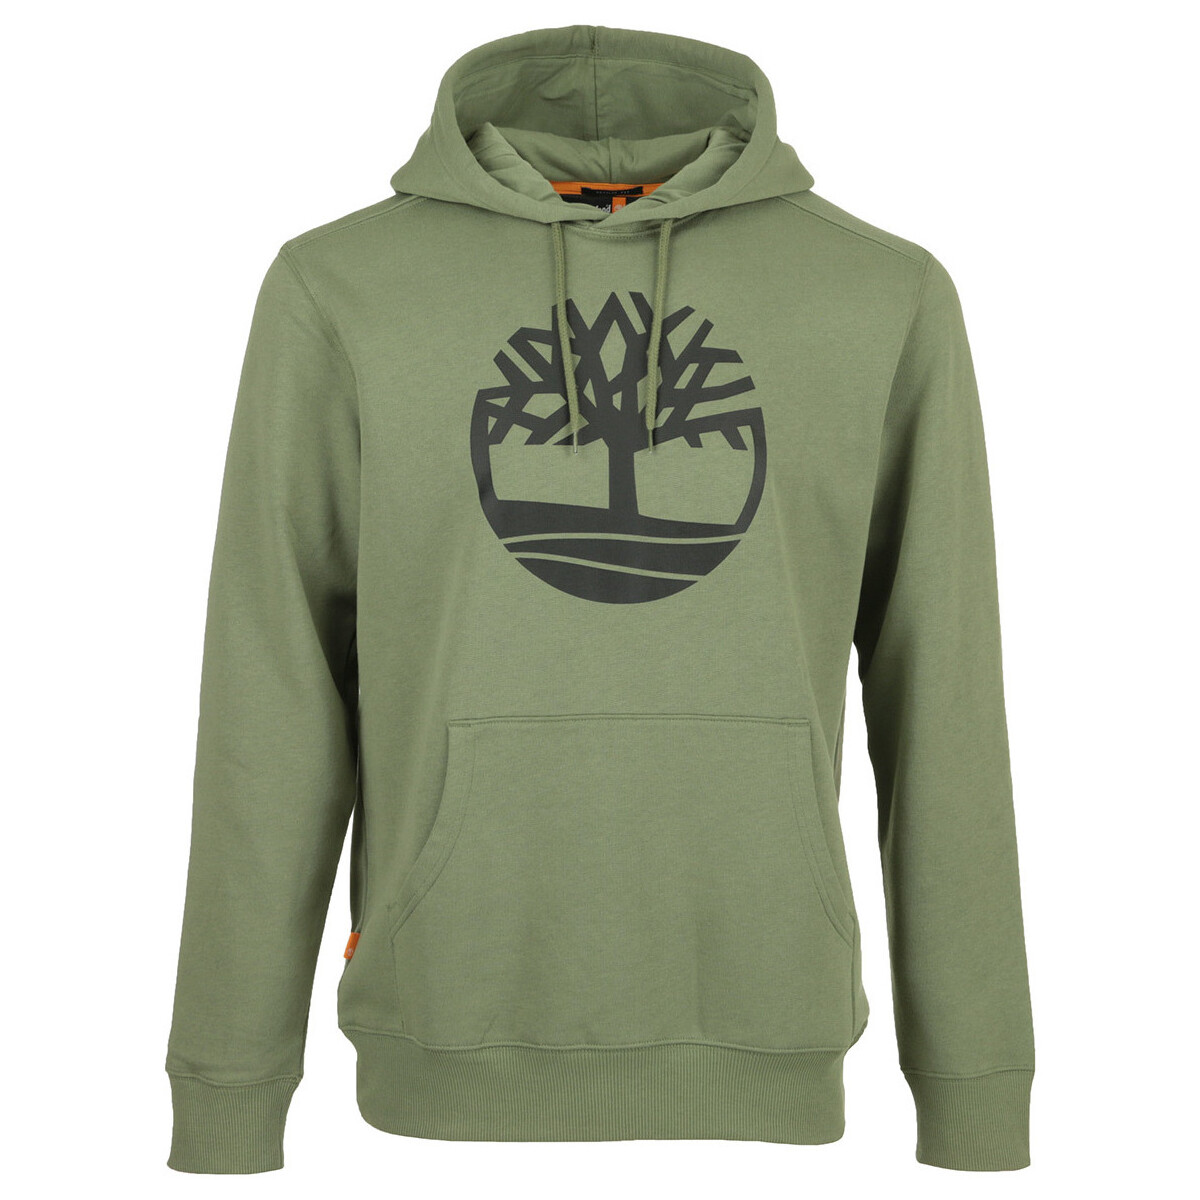 Kleidung Herren Sweatshirts Timberland Core Logo Hood Grün